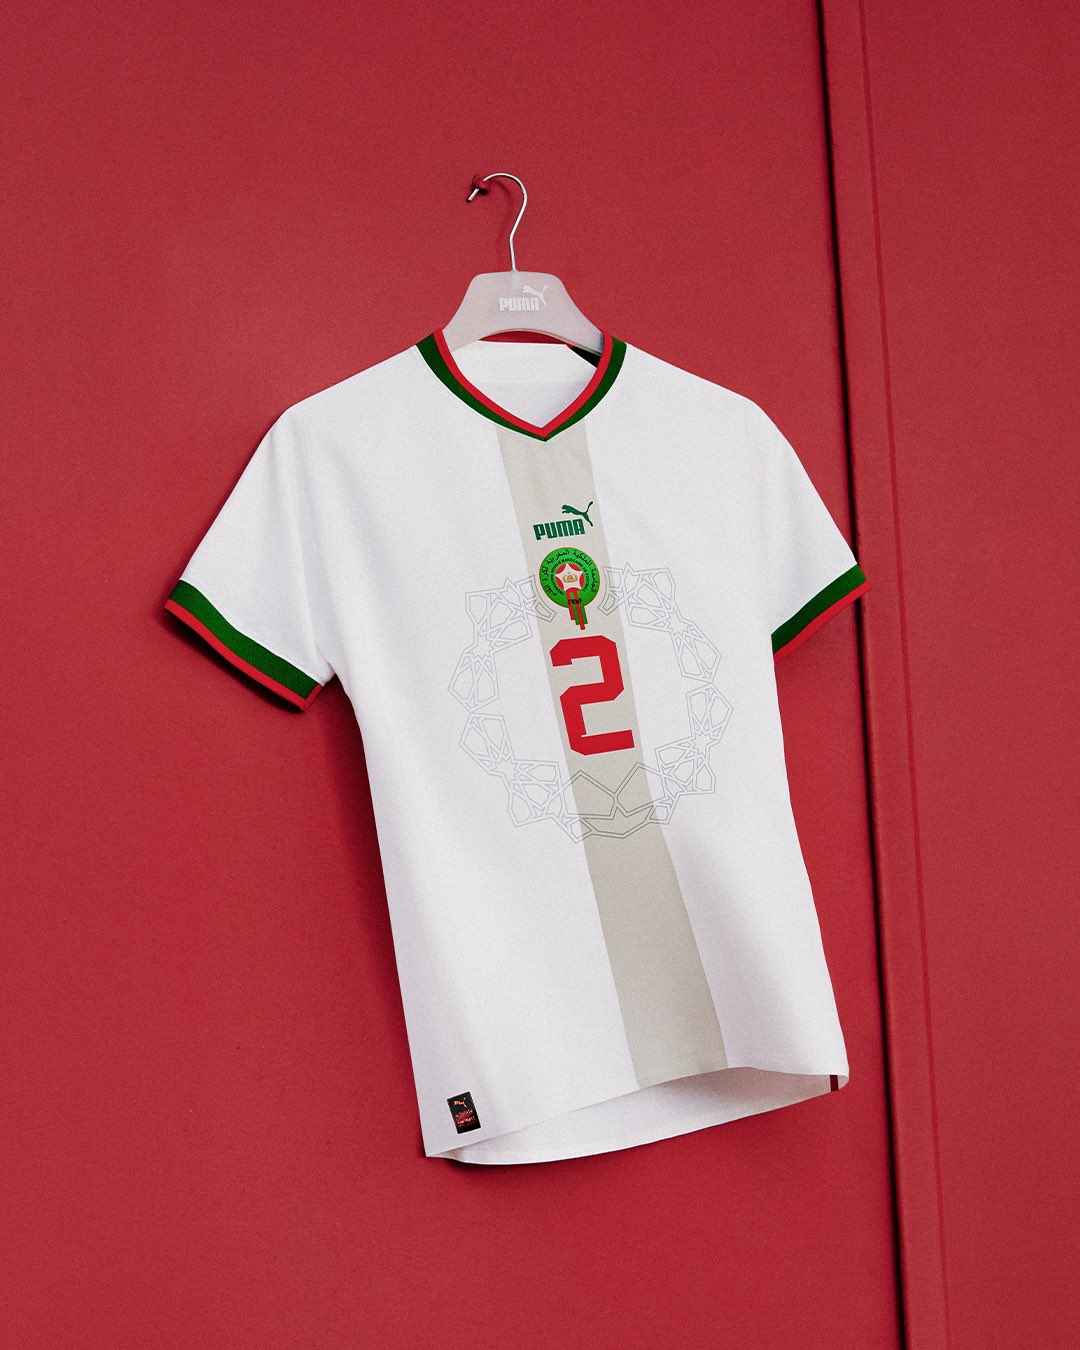 Camiseta alternativa de Marruecos para Qatar 2022 (Foto: Puma Football)